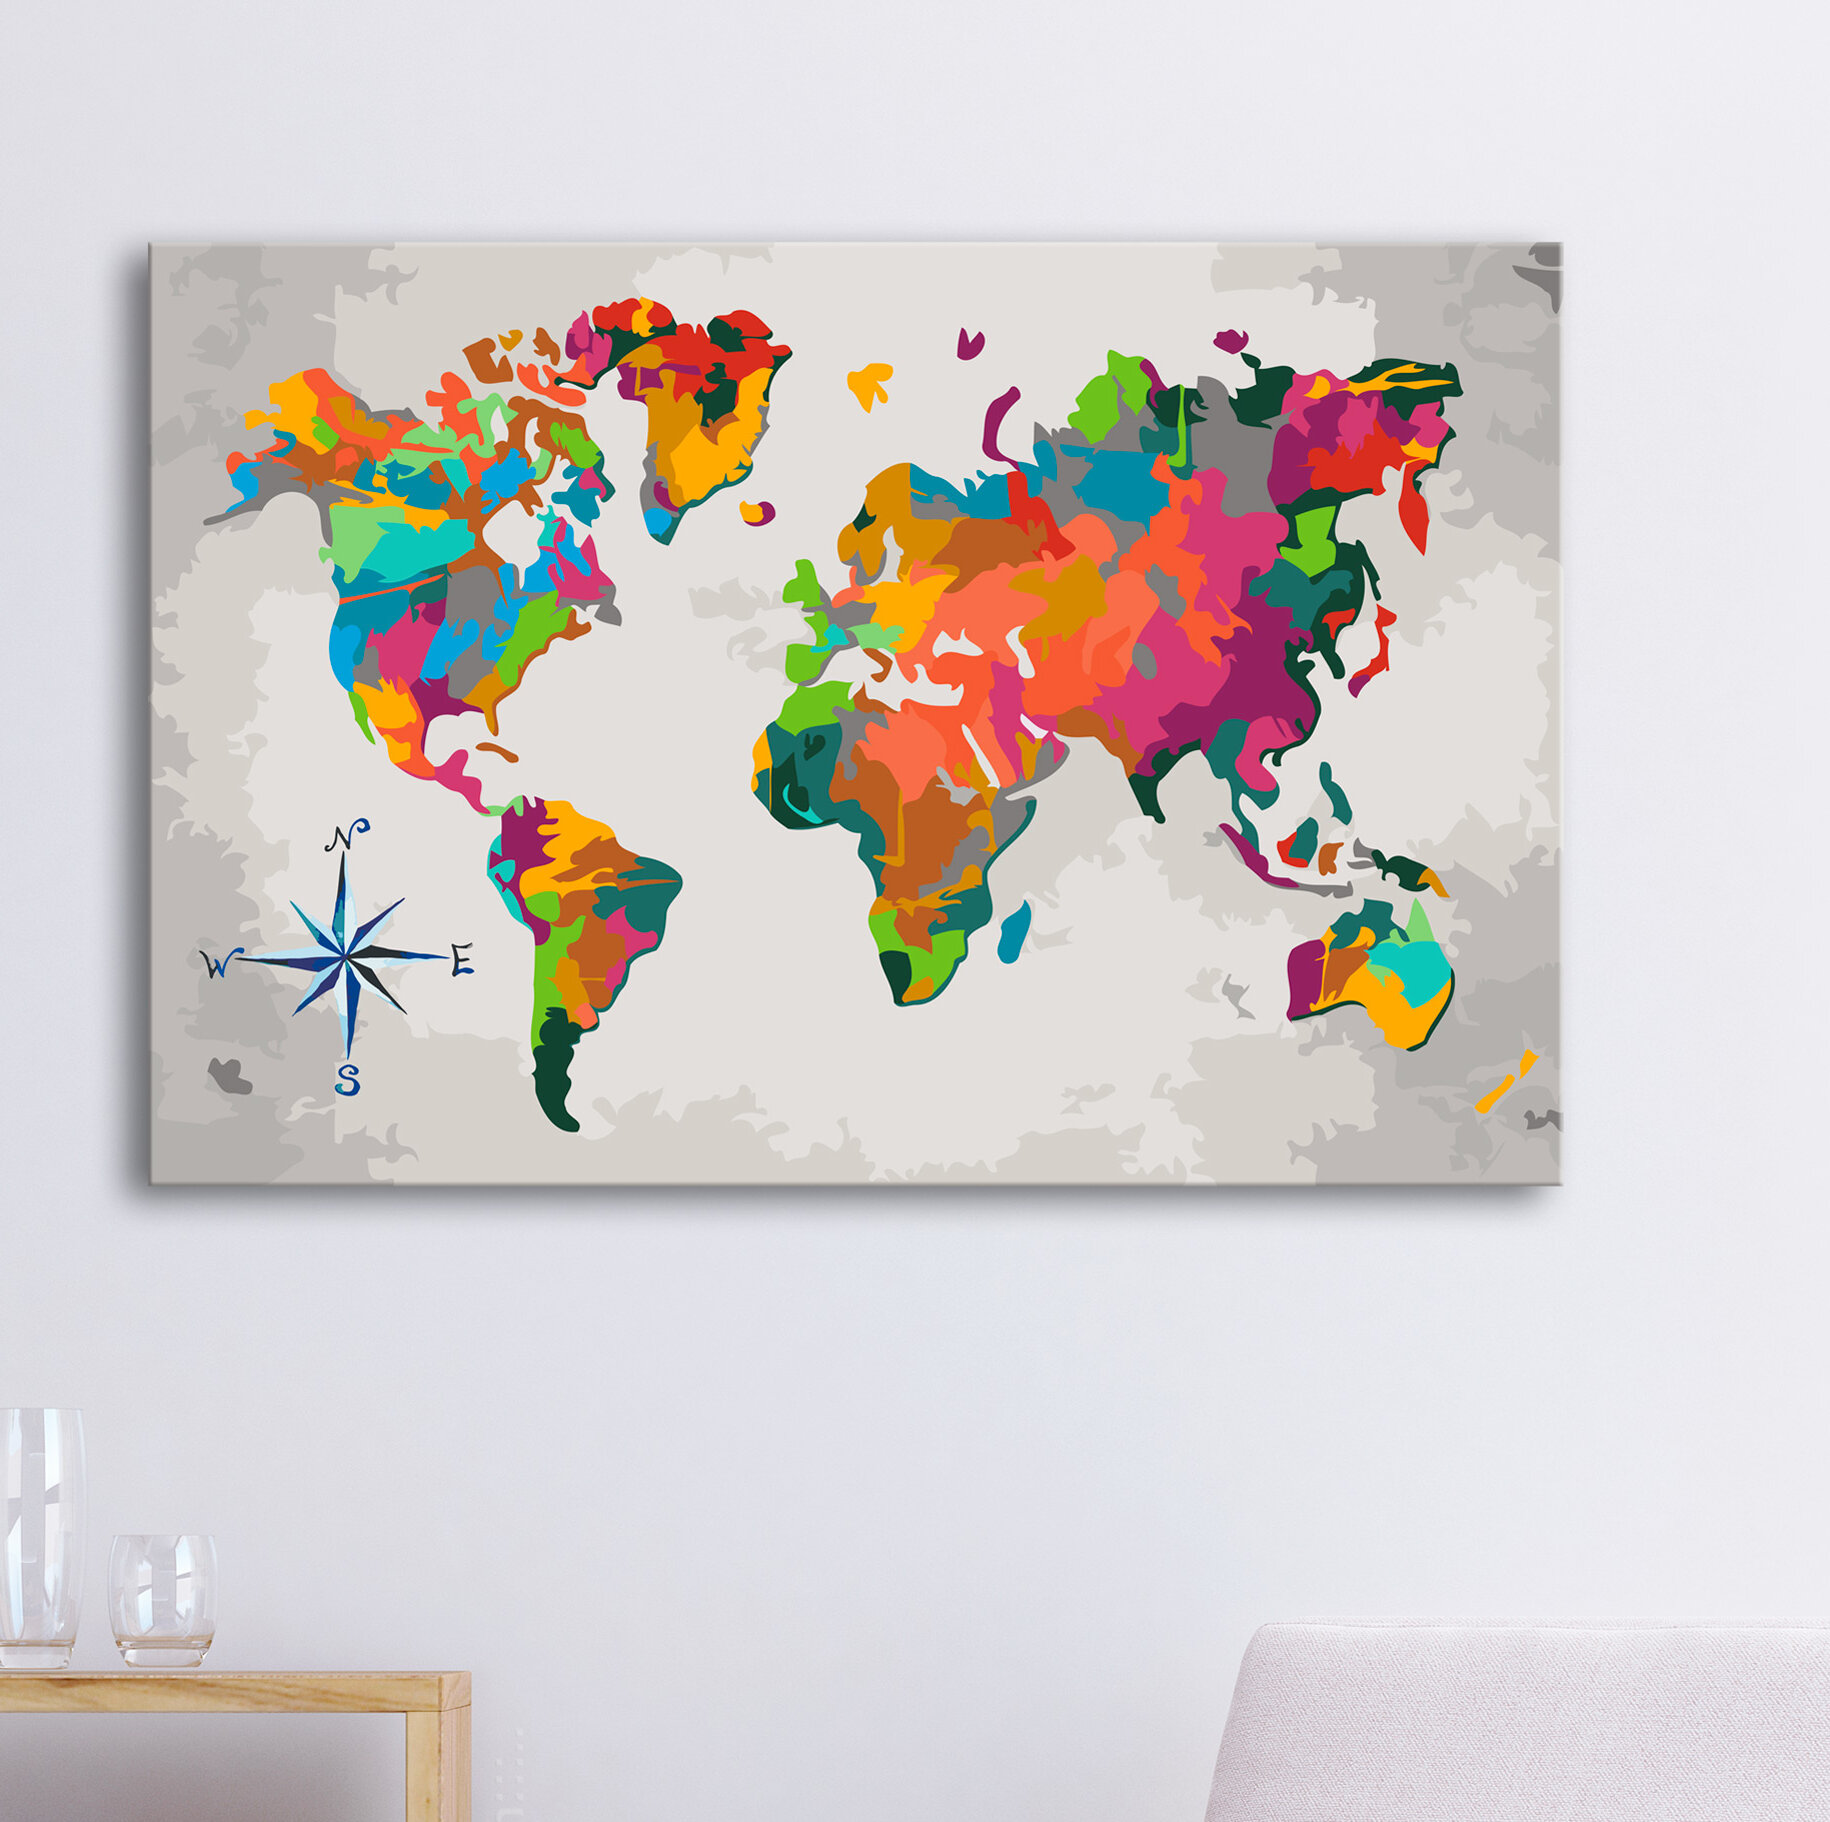 Bless international World Map Compass Rose On Canvas Painting | Wayfair